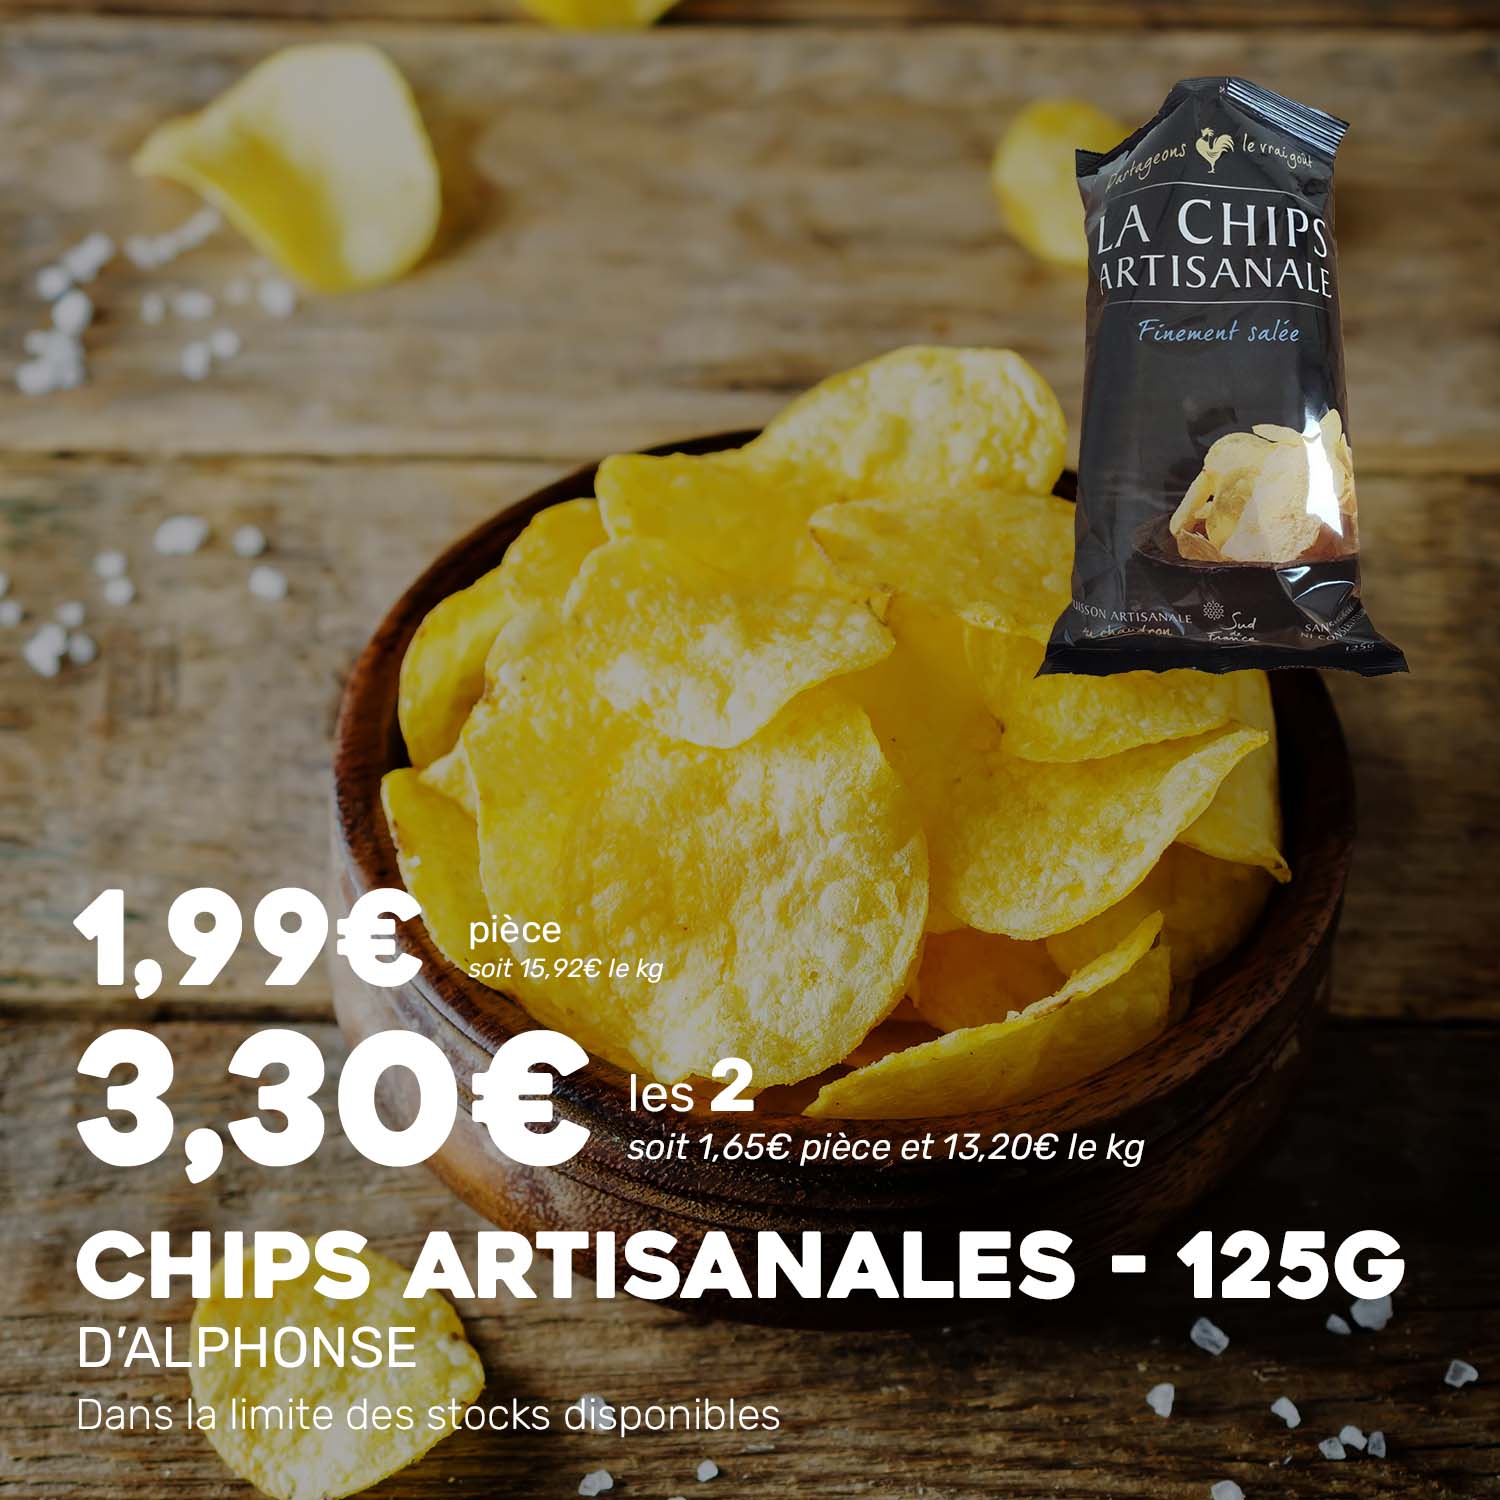 Chips_artisanales_125g_DALPHONSE